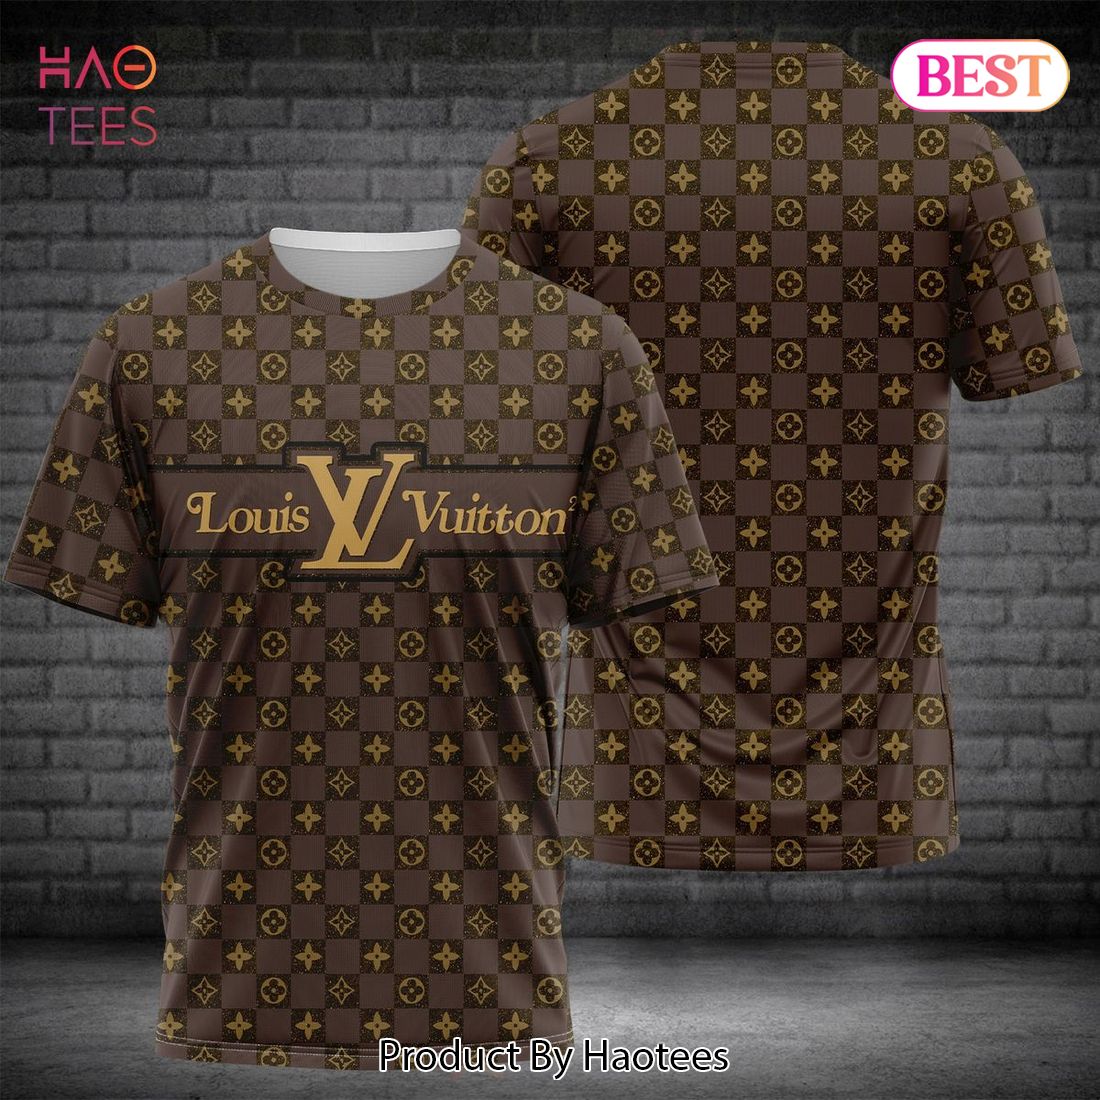 BEST Louis Vuitton Luxury Brand Brown Color 3D T-Shirt Limited Edition